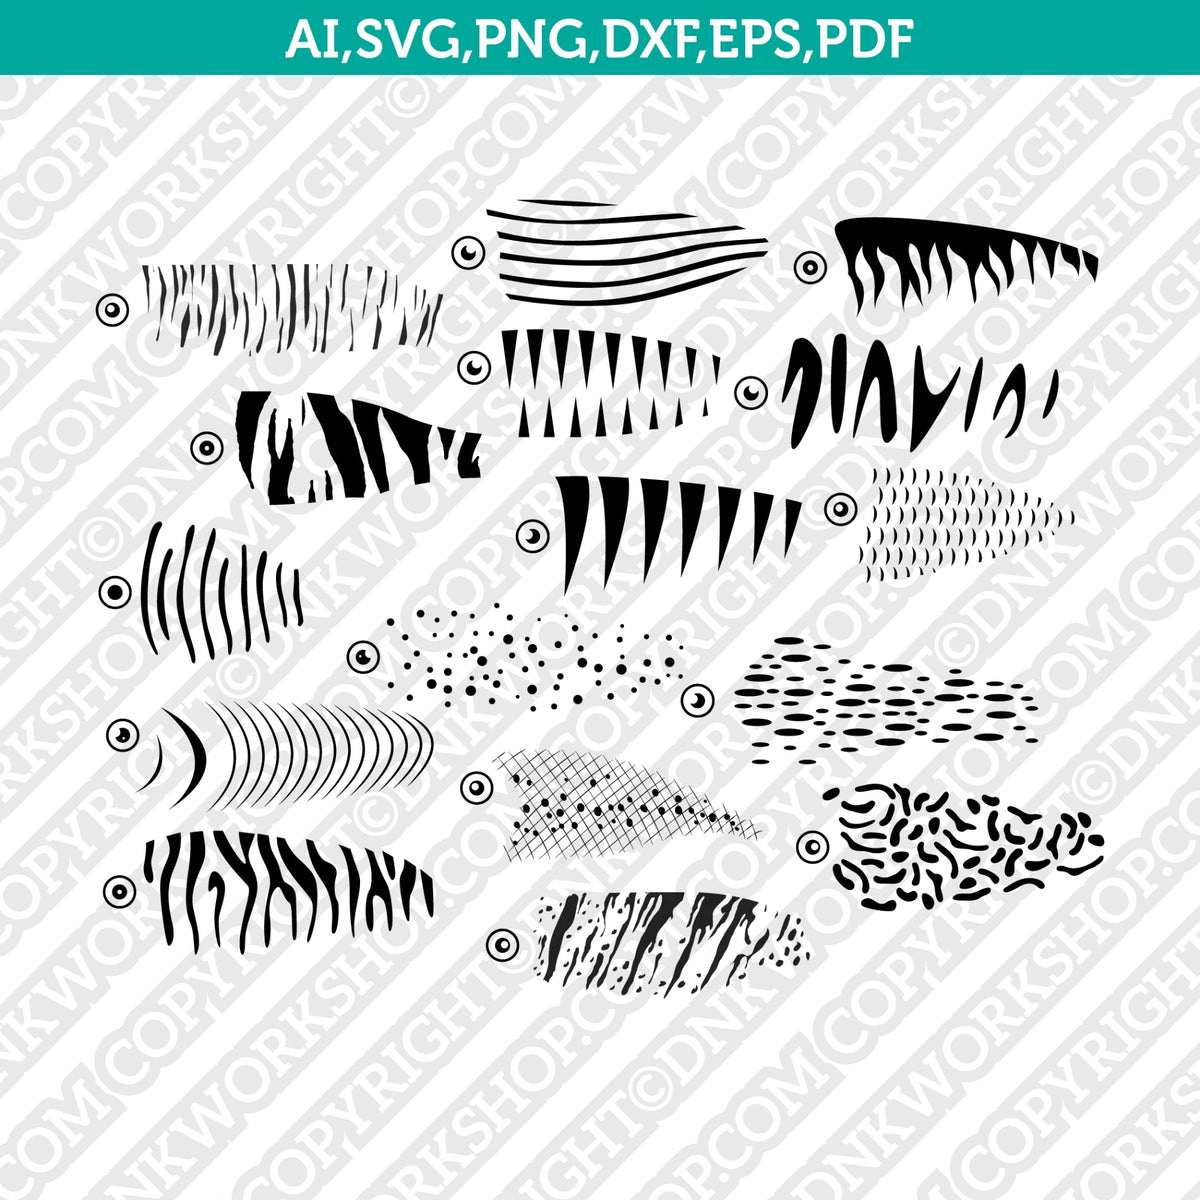 Crankbait Fishing Lure 5 | svg png dxf eps pdf | transparent vector graphic  design cut print dye sub laser engrave files commercial use